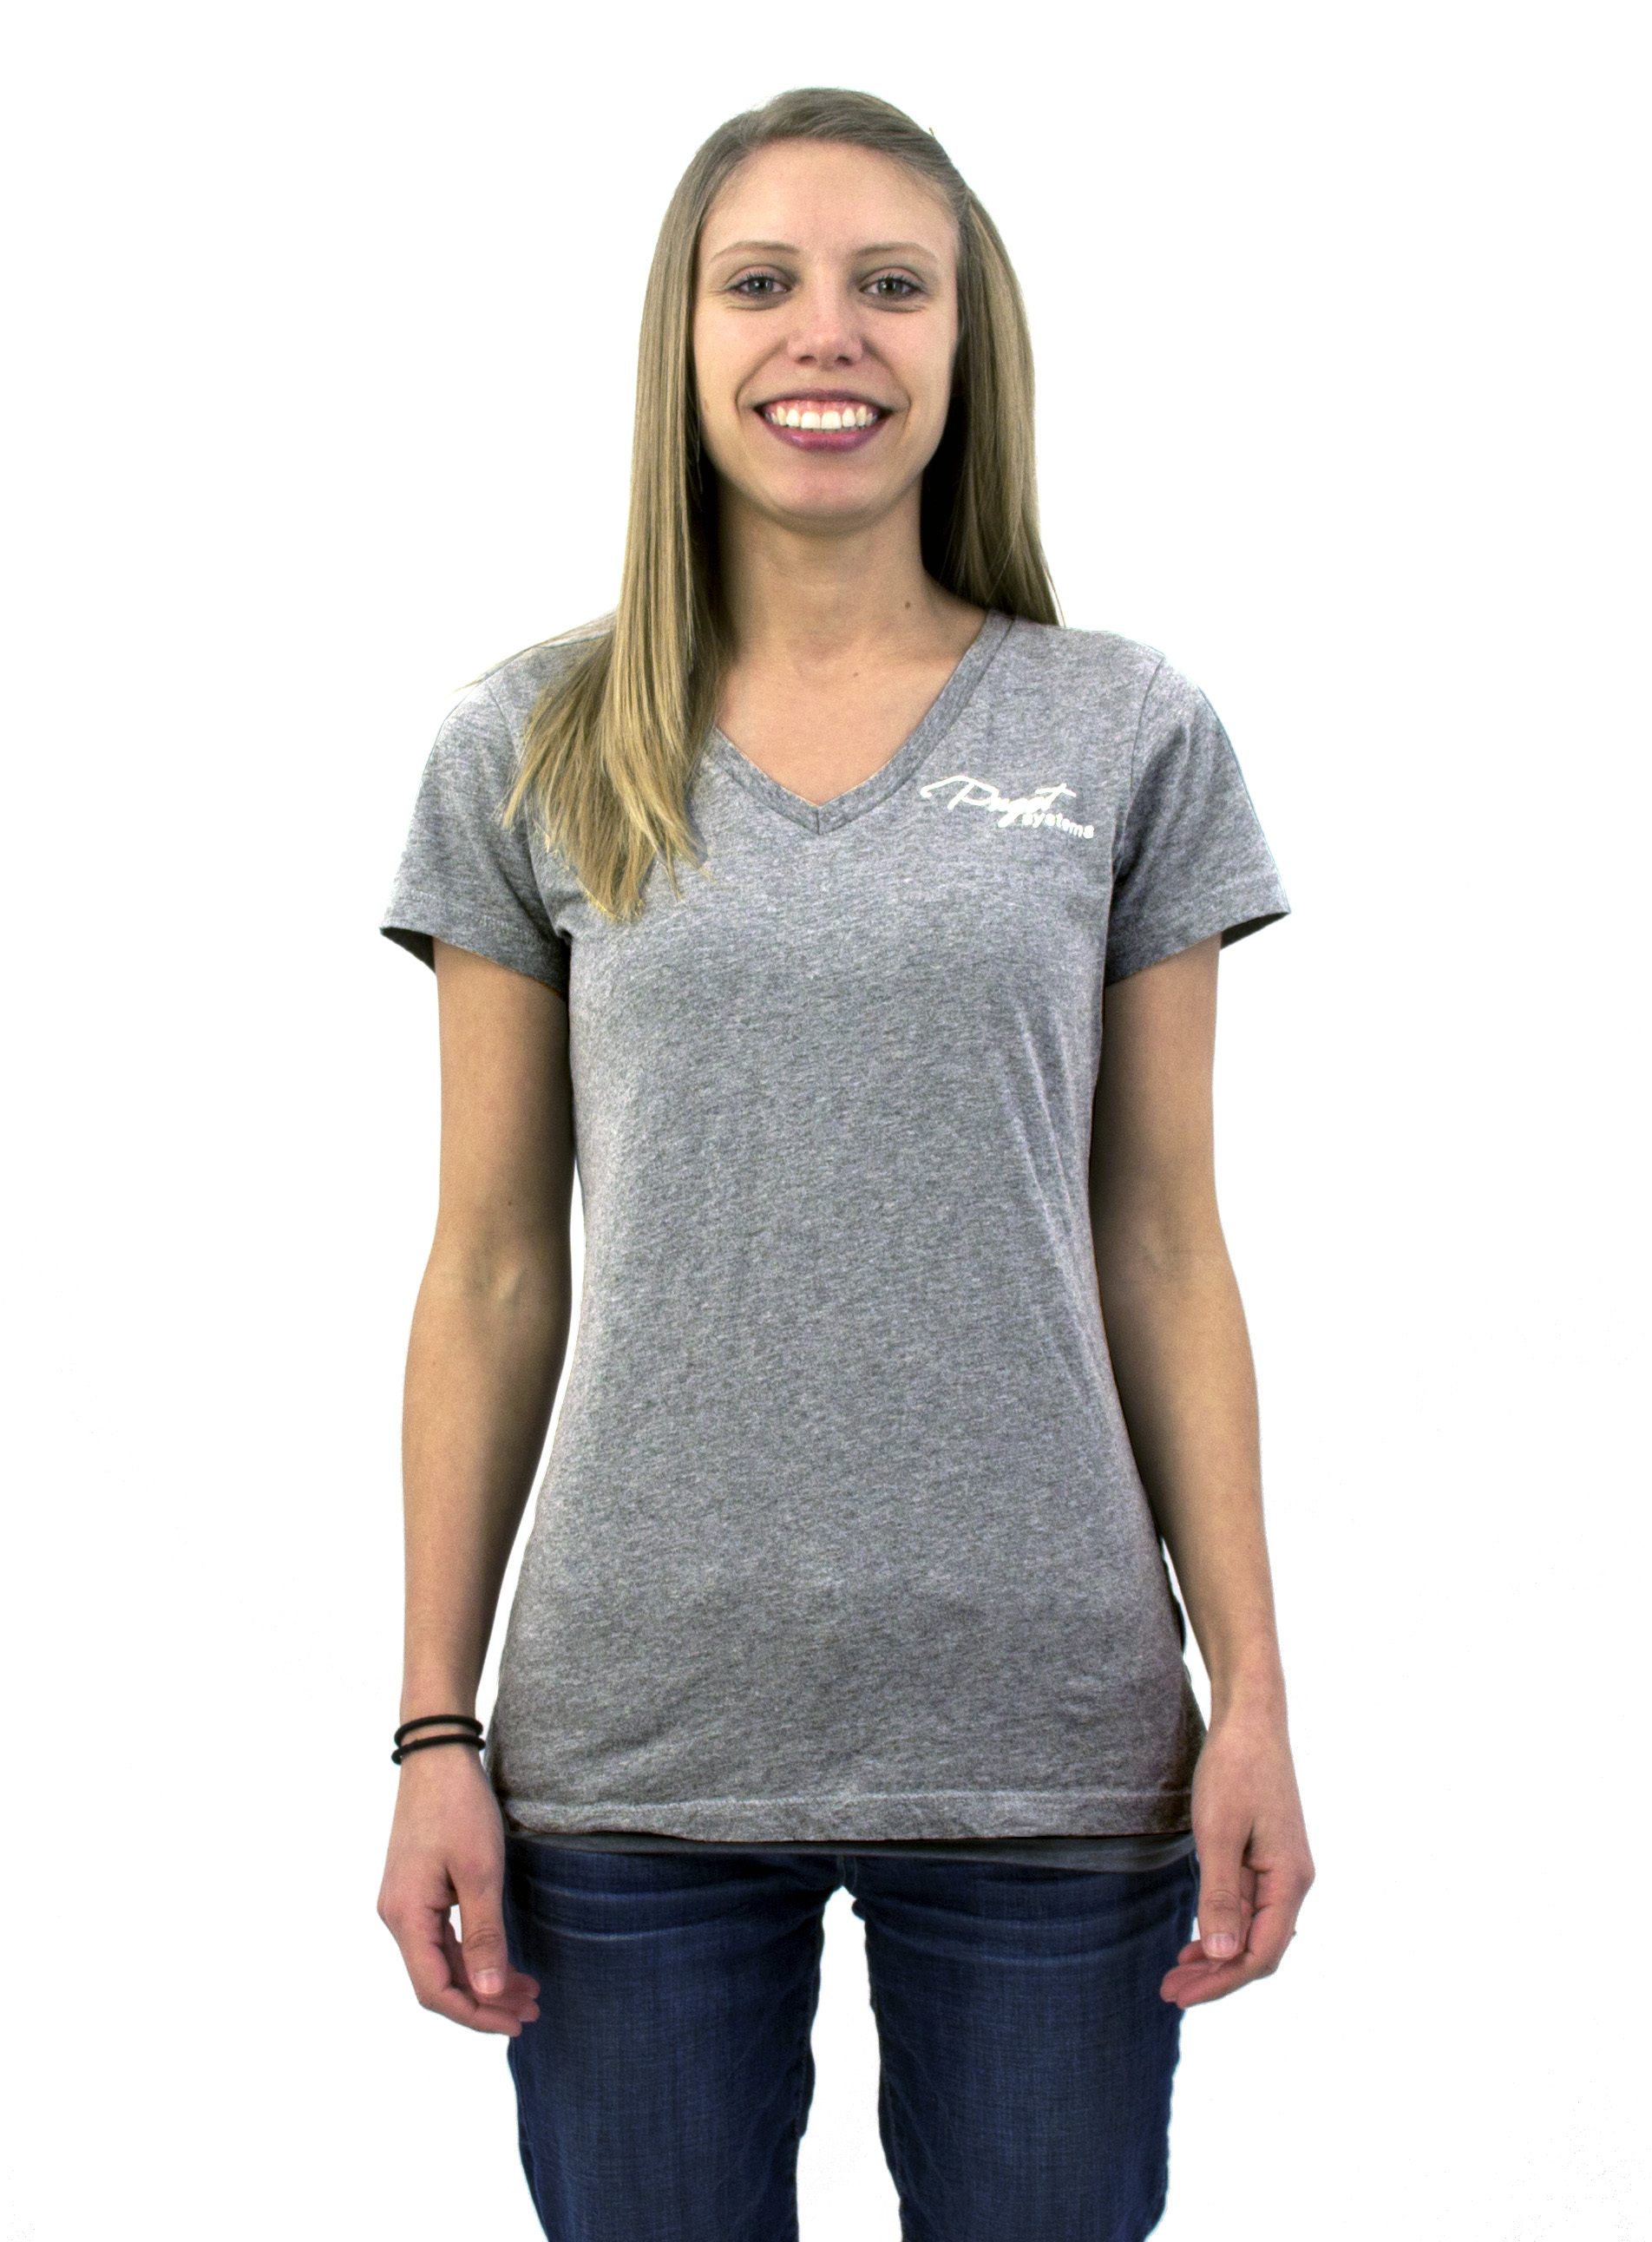 Configure PC w/ Puget Womens Grey V-Neck T-Shirt (X large) Puget Gear